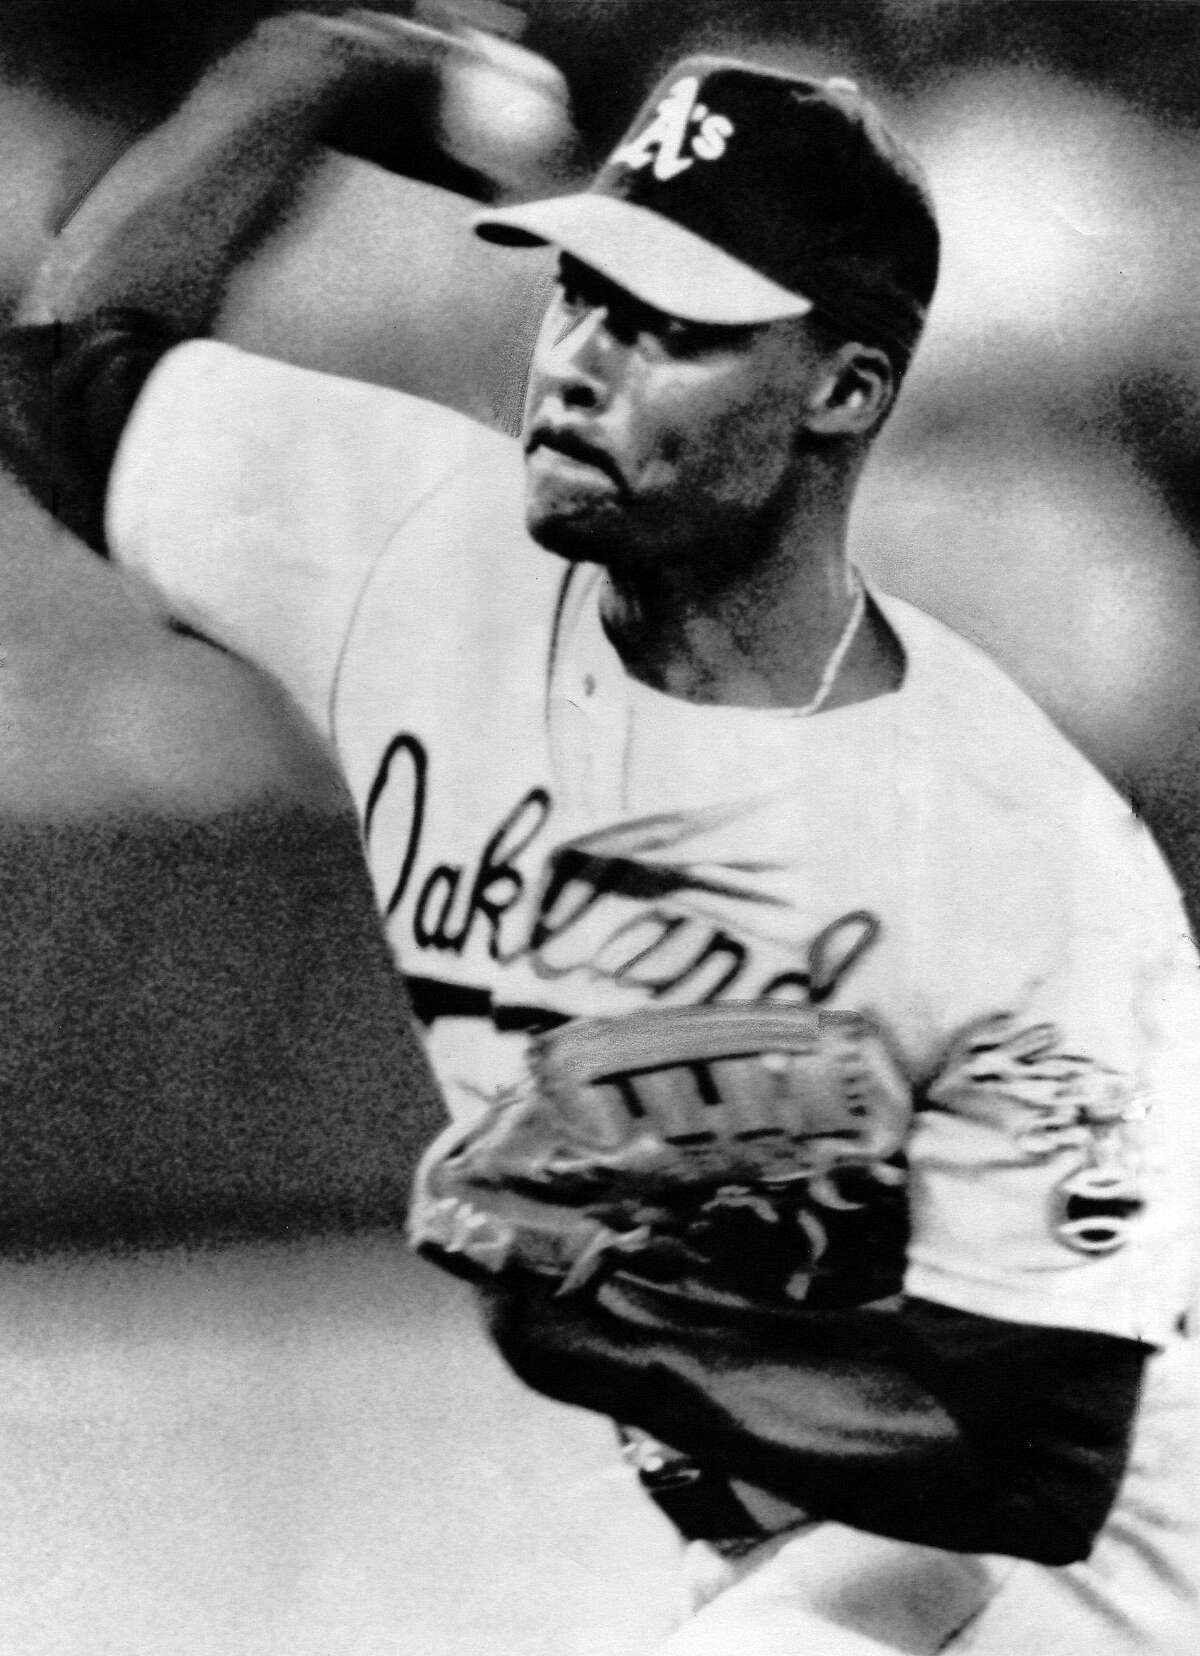 June 29, 1990: Oakland's Dave Stewart hurls no-hitter in Toronto